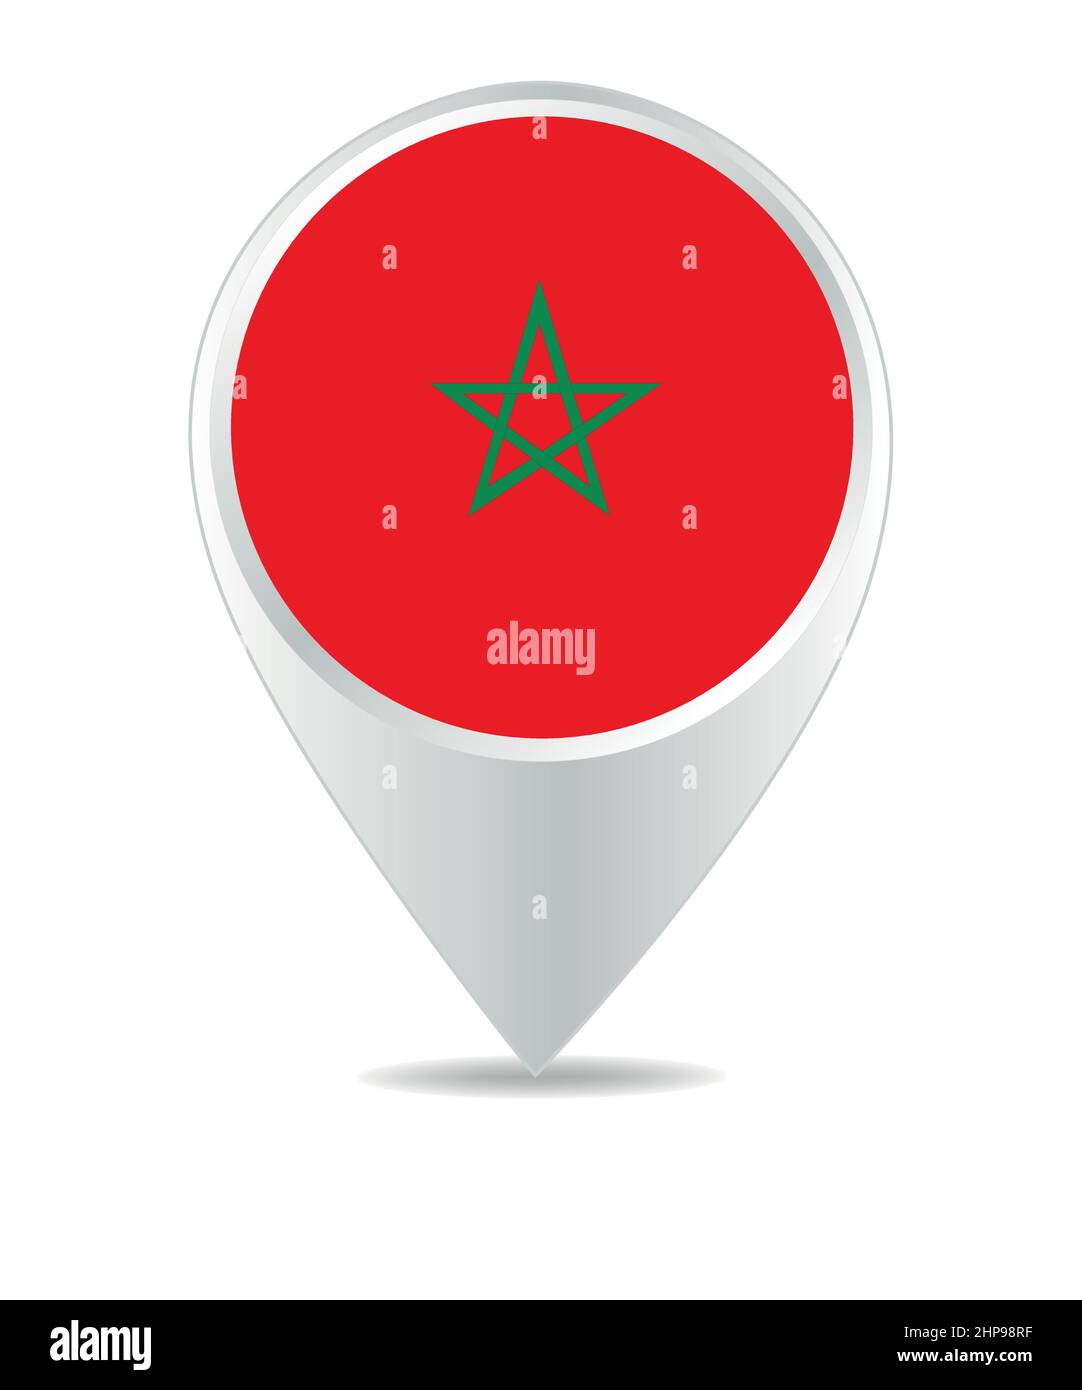 Location Icon for Morocco Stock Vector